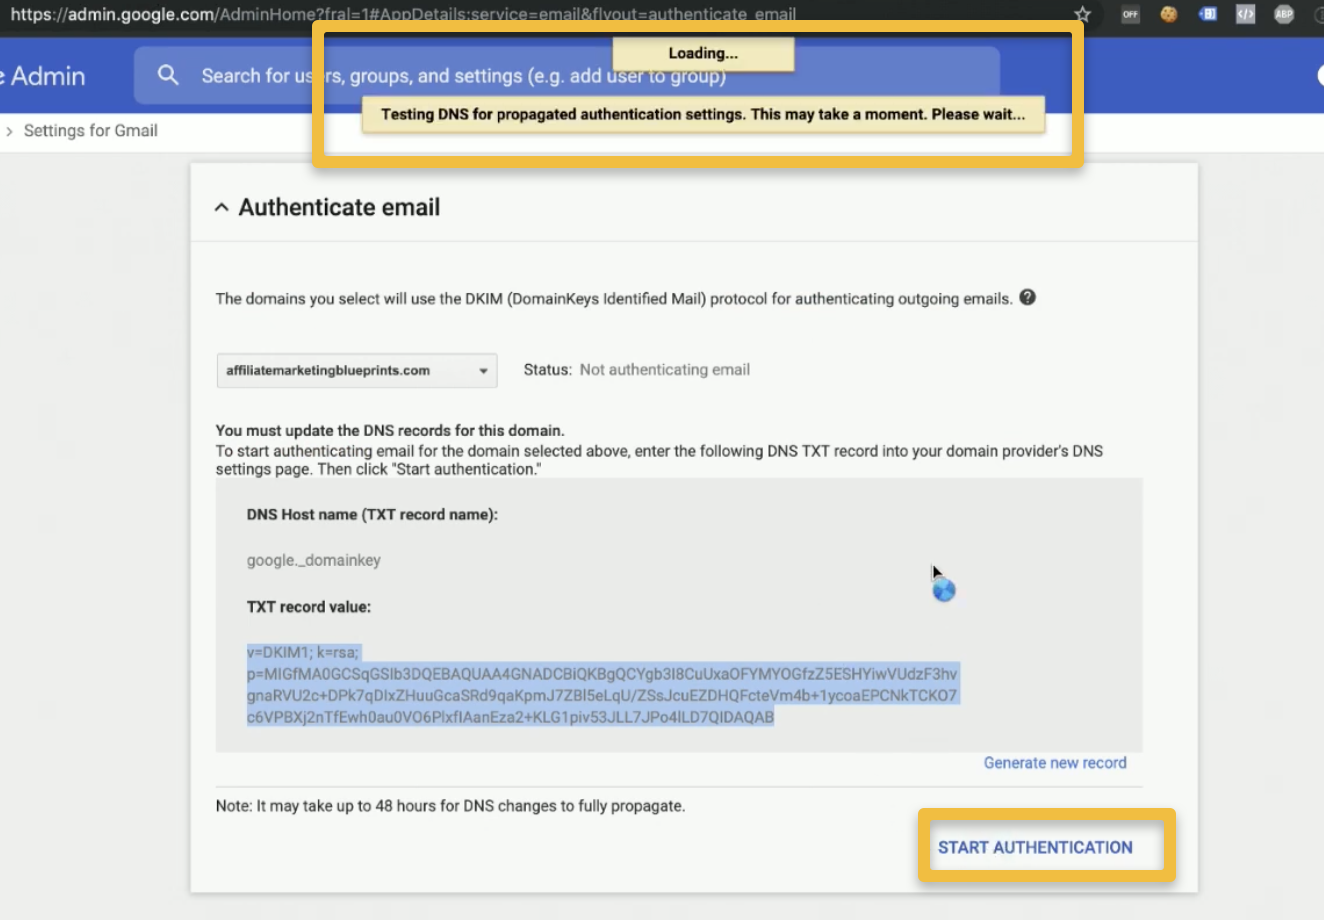 Start DKIM authentication in Google Admin console